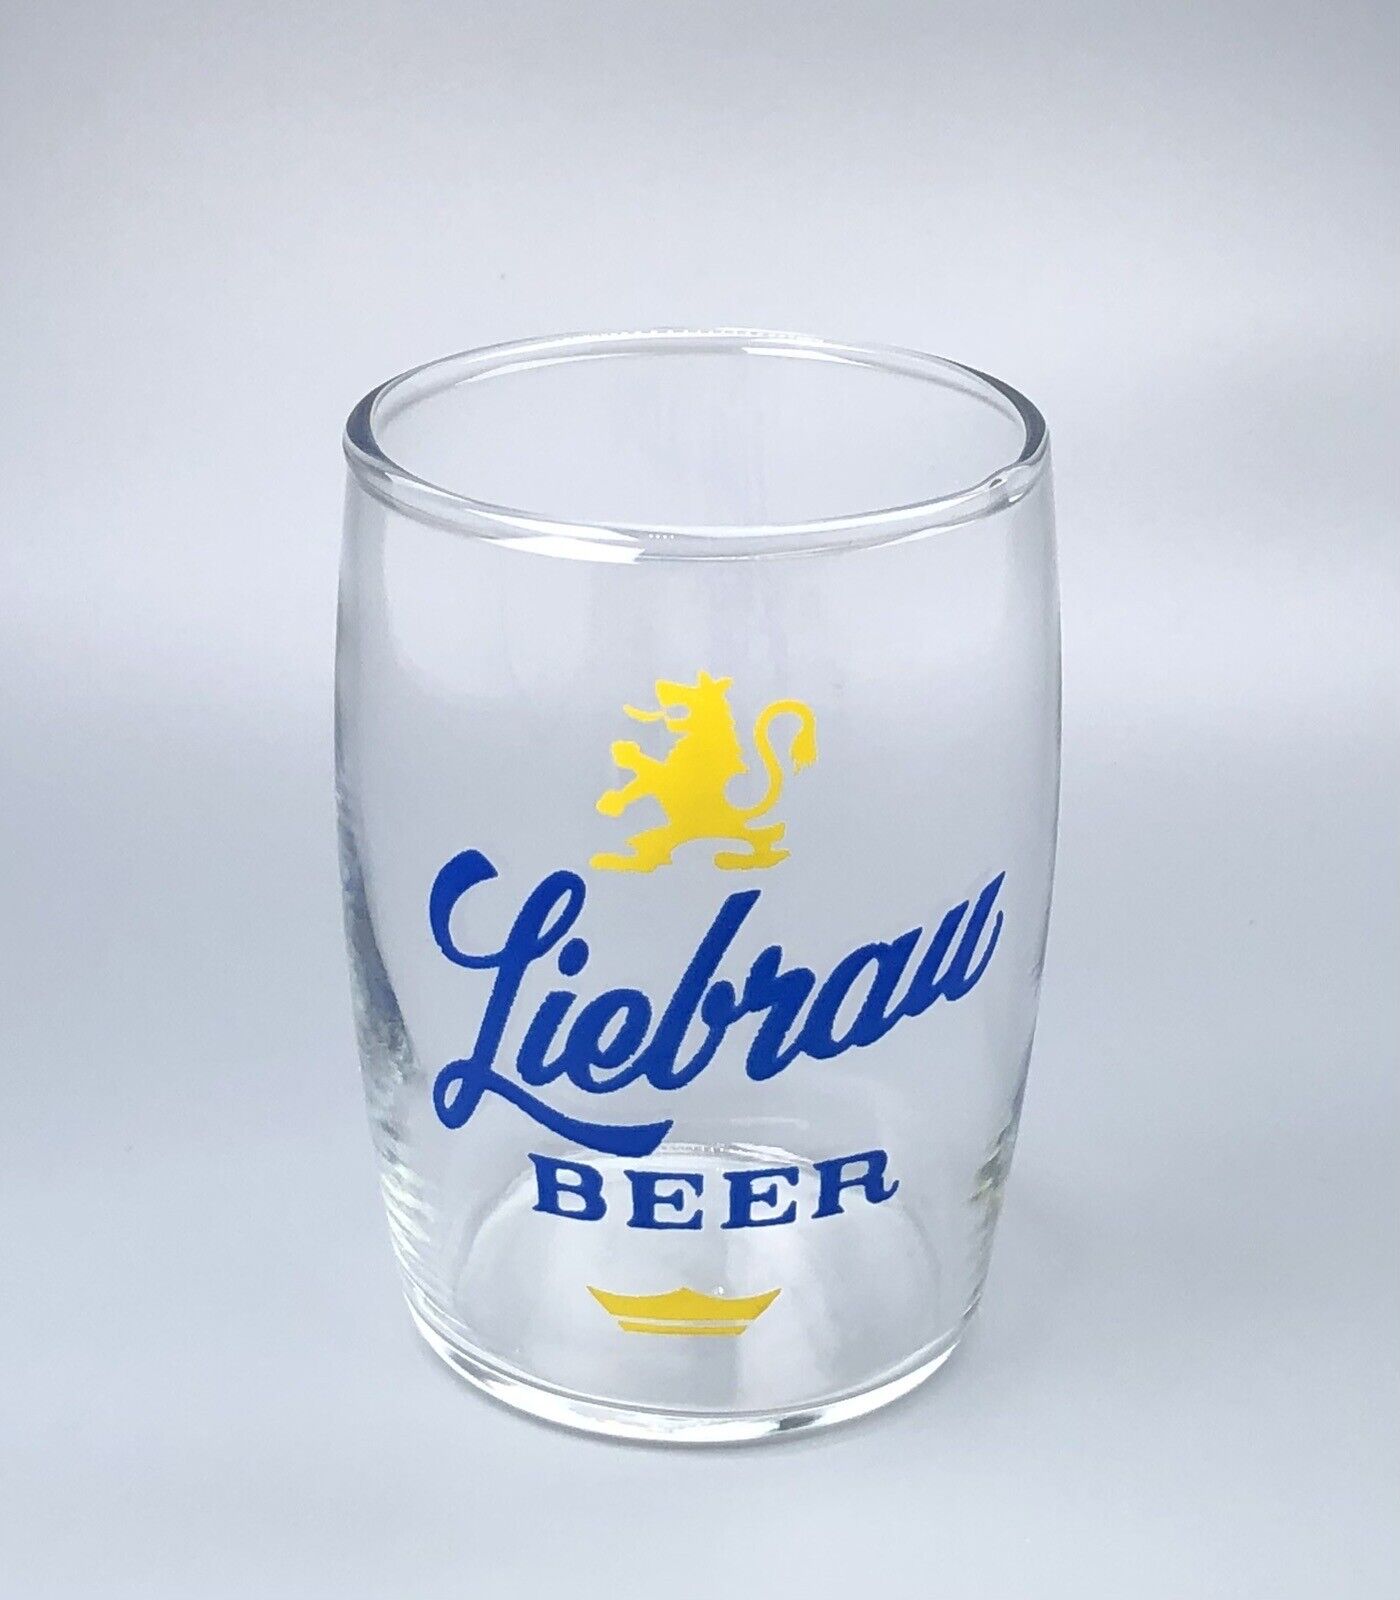 Liebrau Beer Barrel Glass / Vtg Tavern Barware Advertising / Man Cave Bar Decor